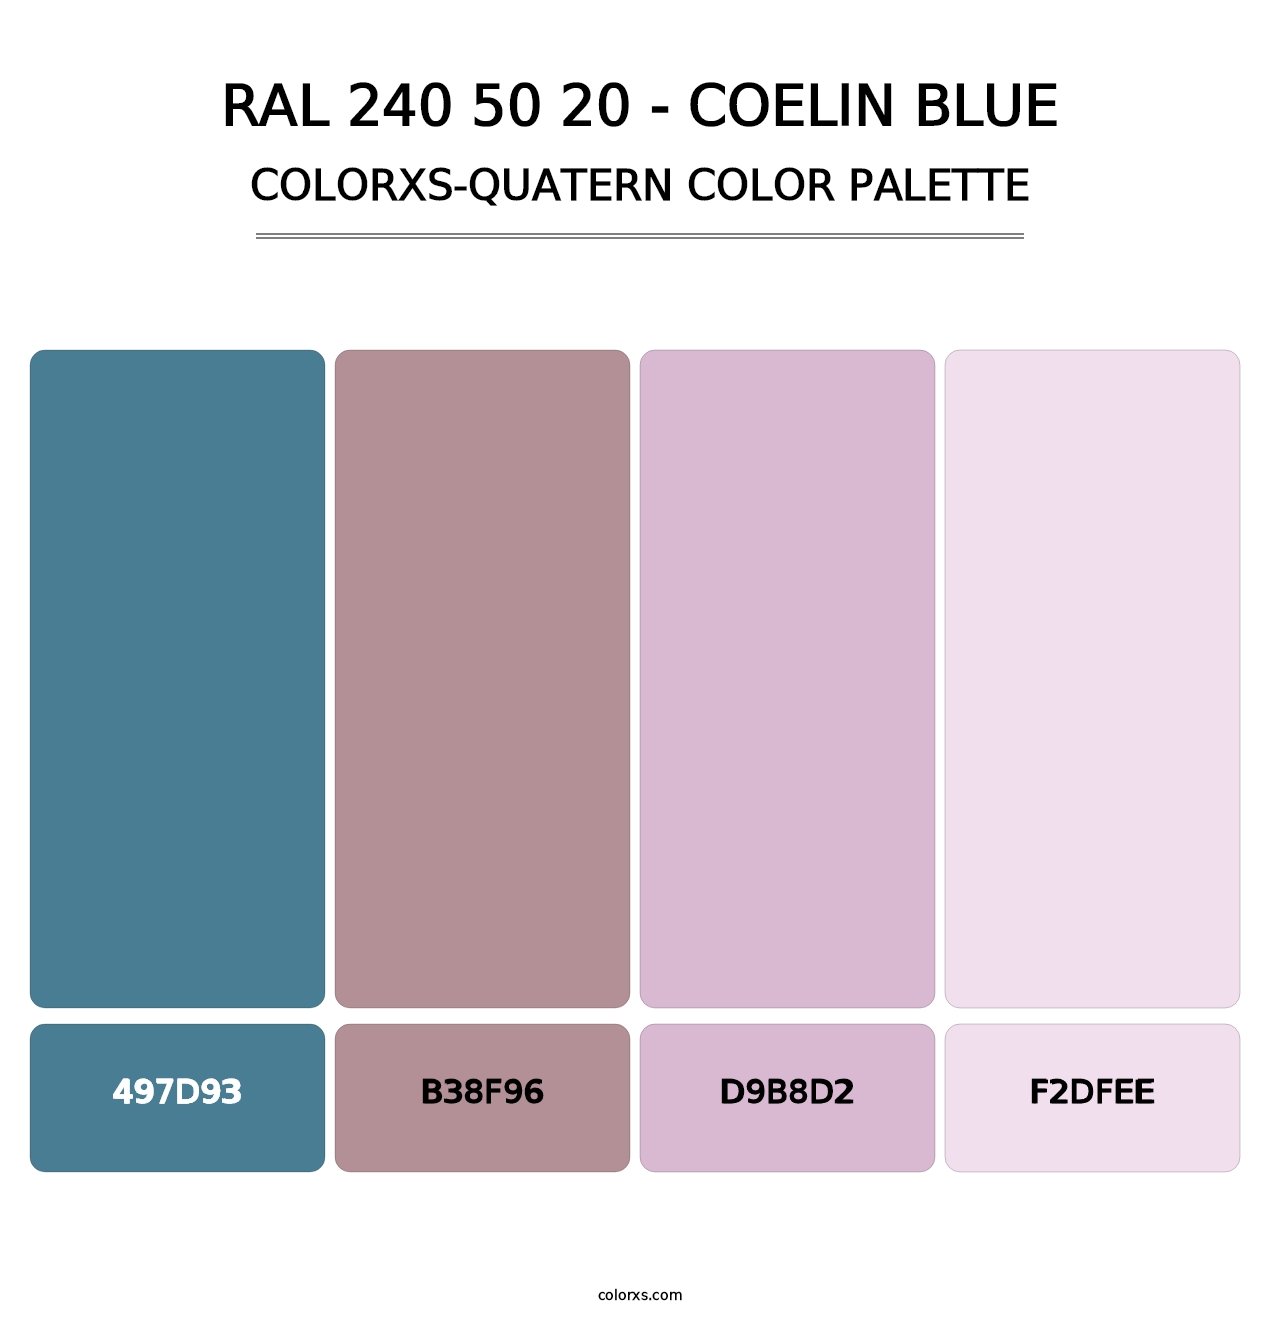 RAL 240 50 20 - Coelin Blue - Colorxs Quatern Palette